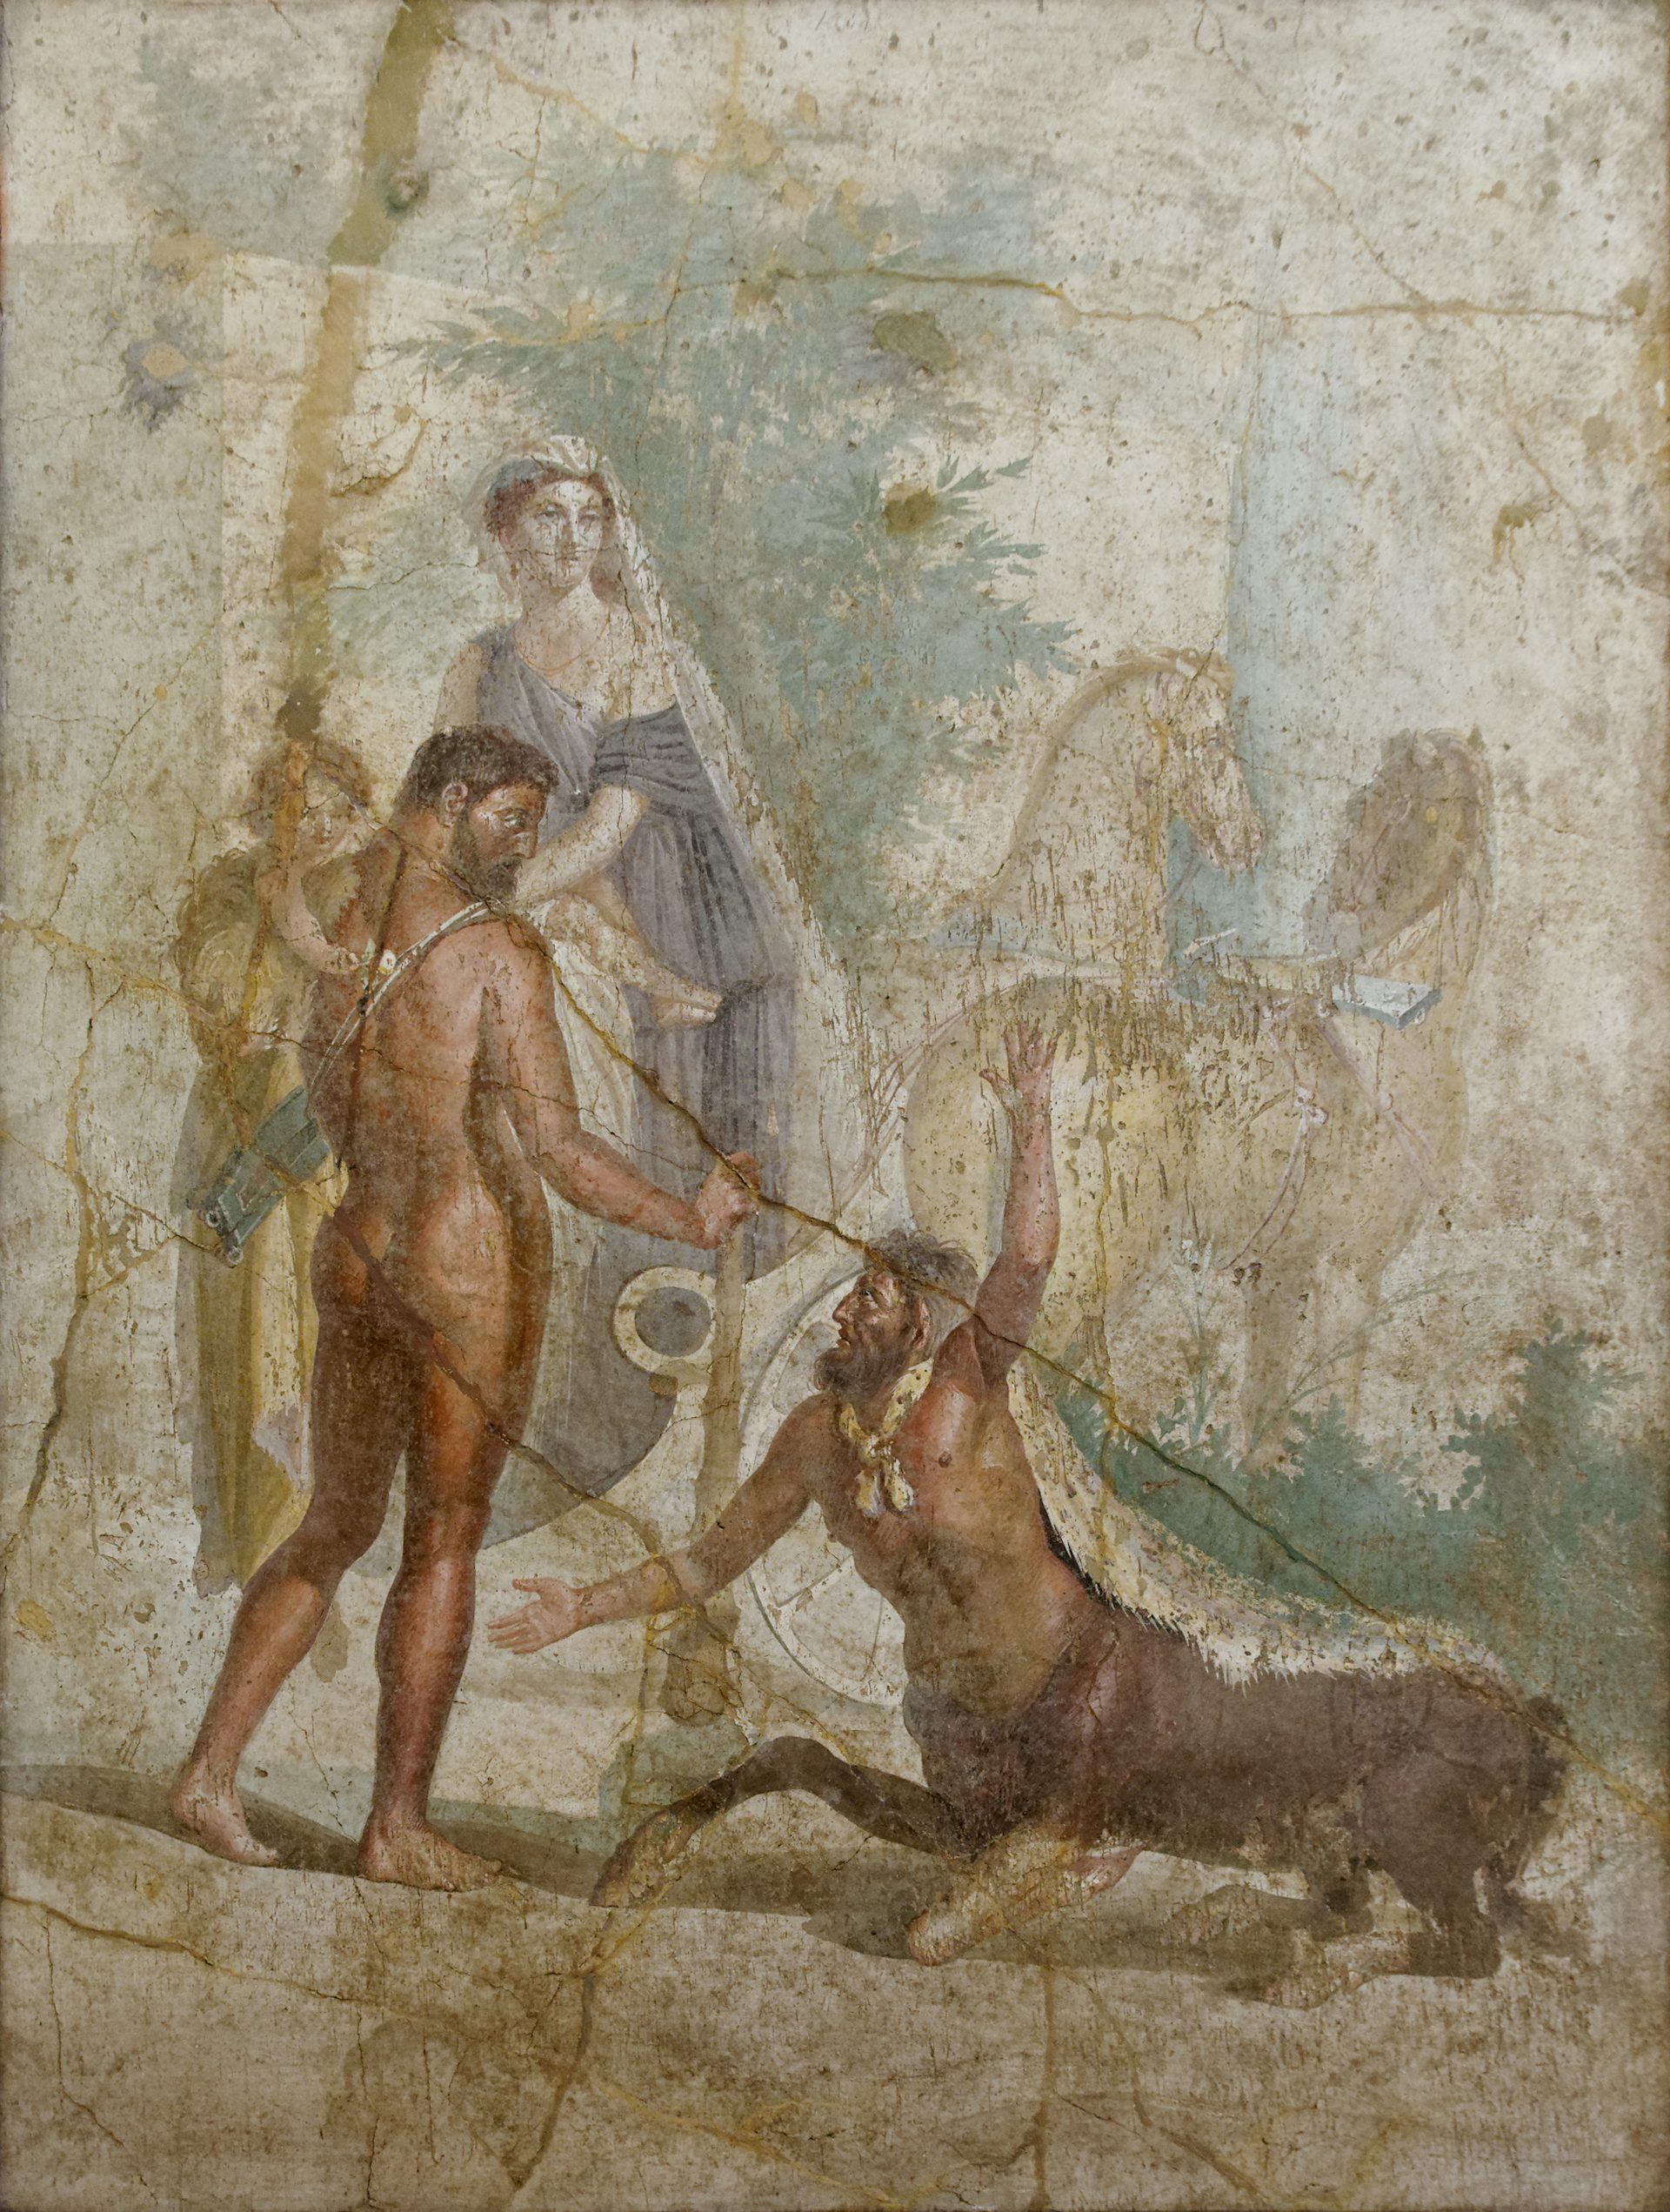 hercules Hyllus Deianira Nessus fresco, house of the centaur, first century CE